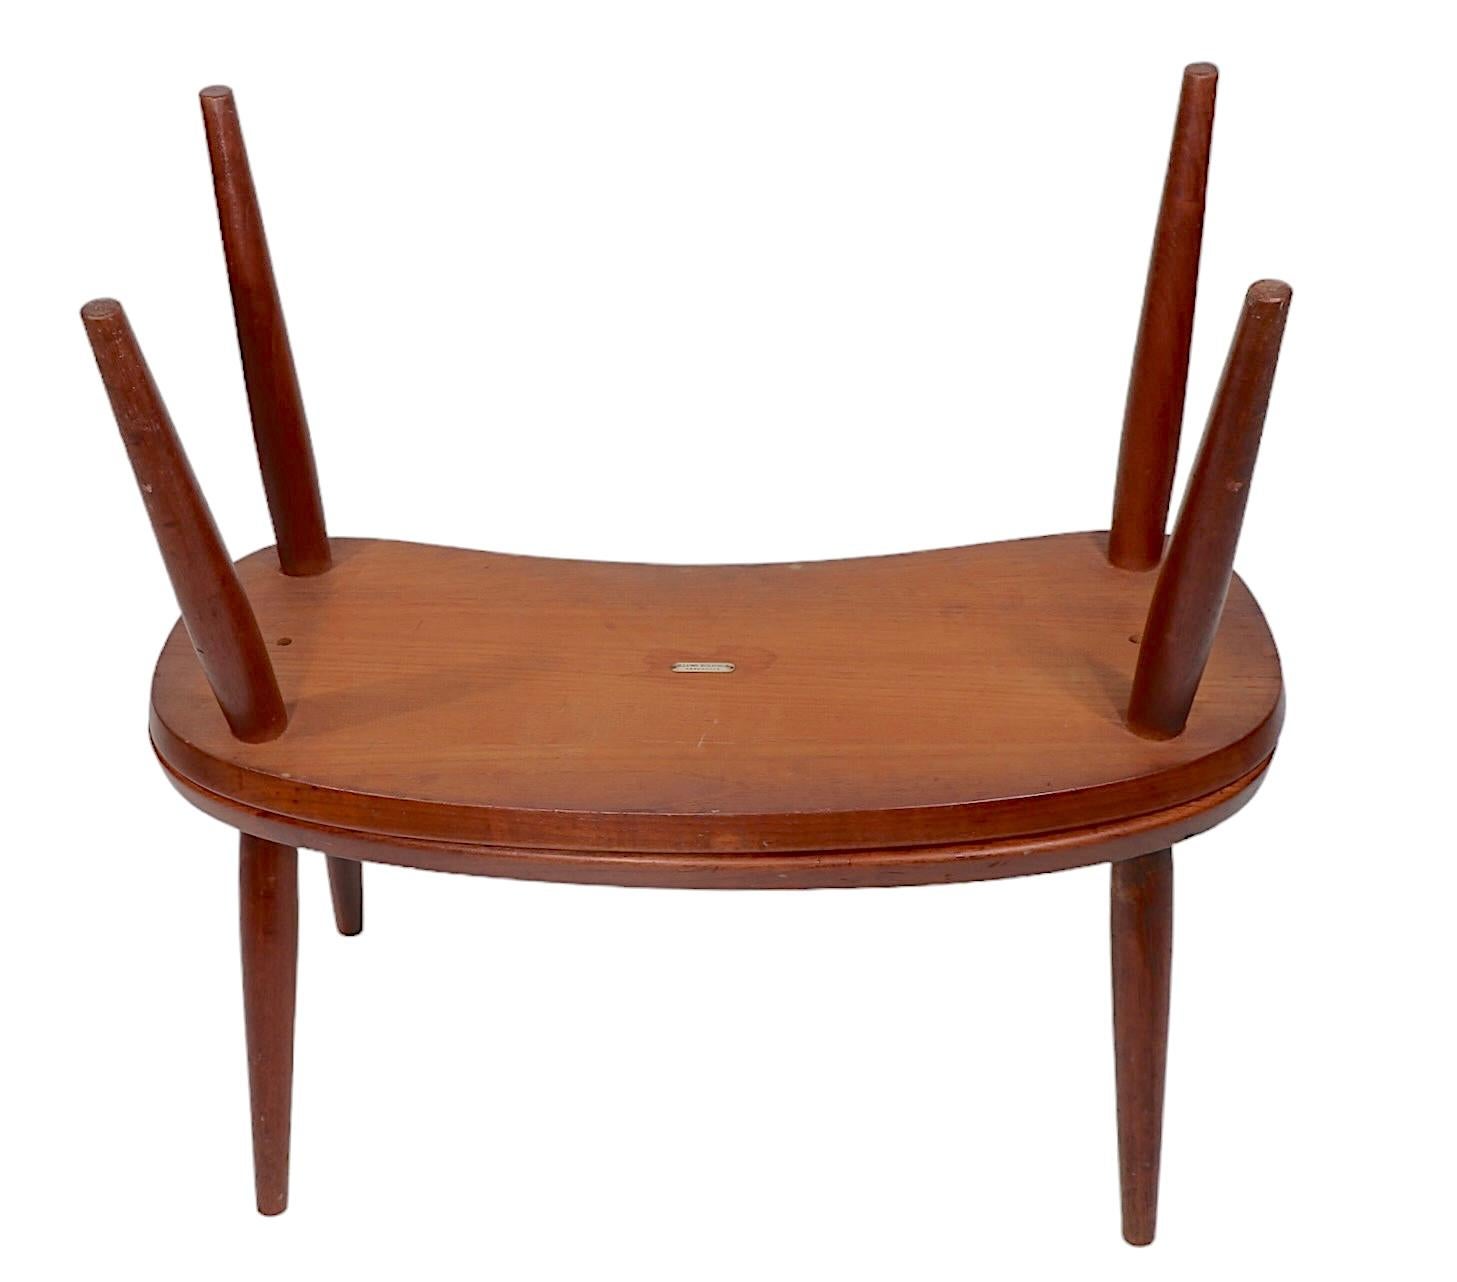 Pr. Danish Mid Century Modern Tables Made by Illum Bolighus att. to Josef Frank  For Sale 4